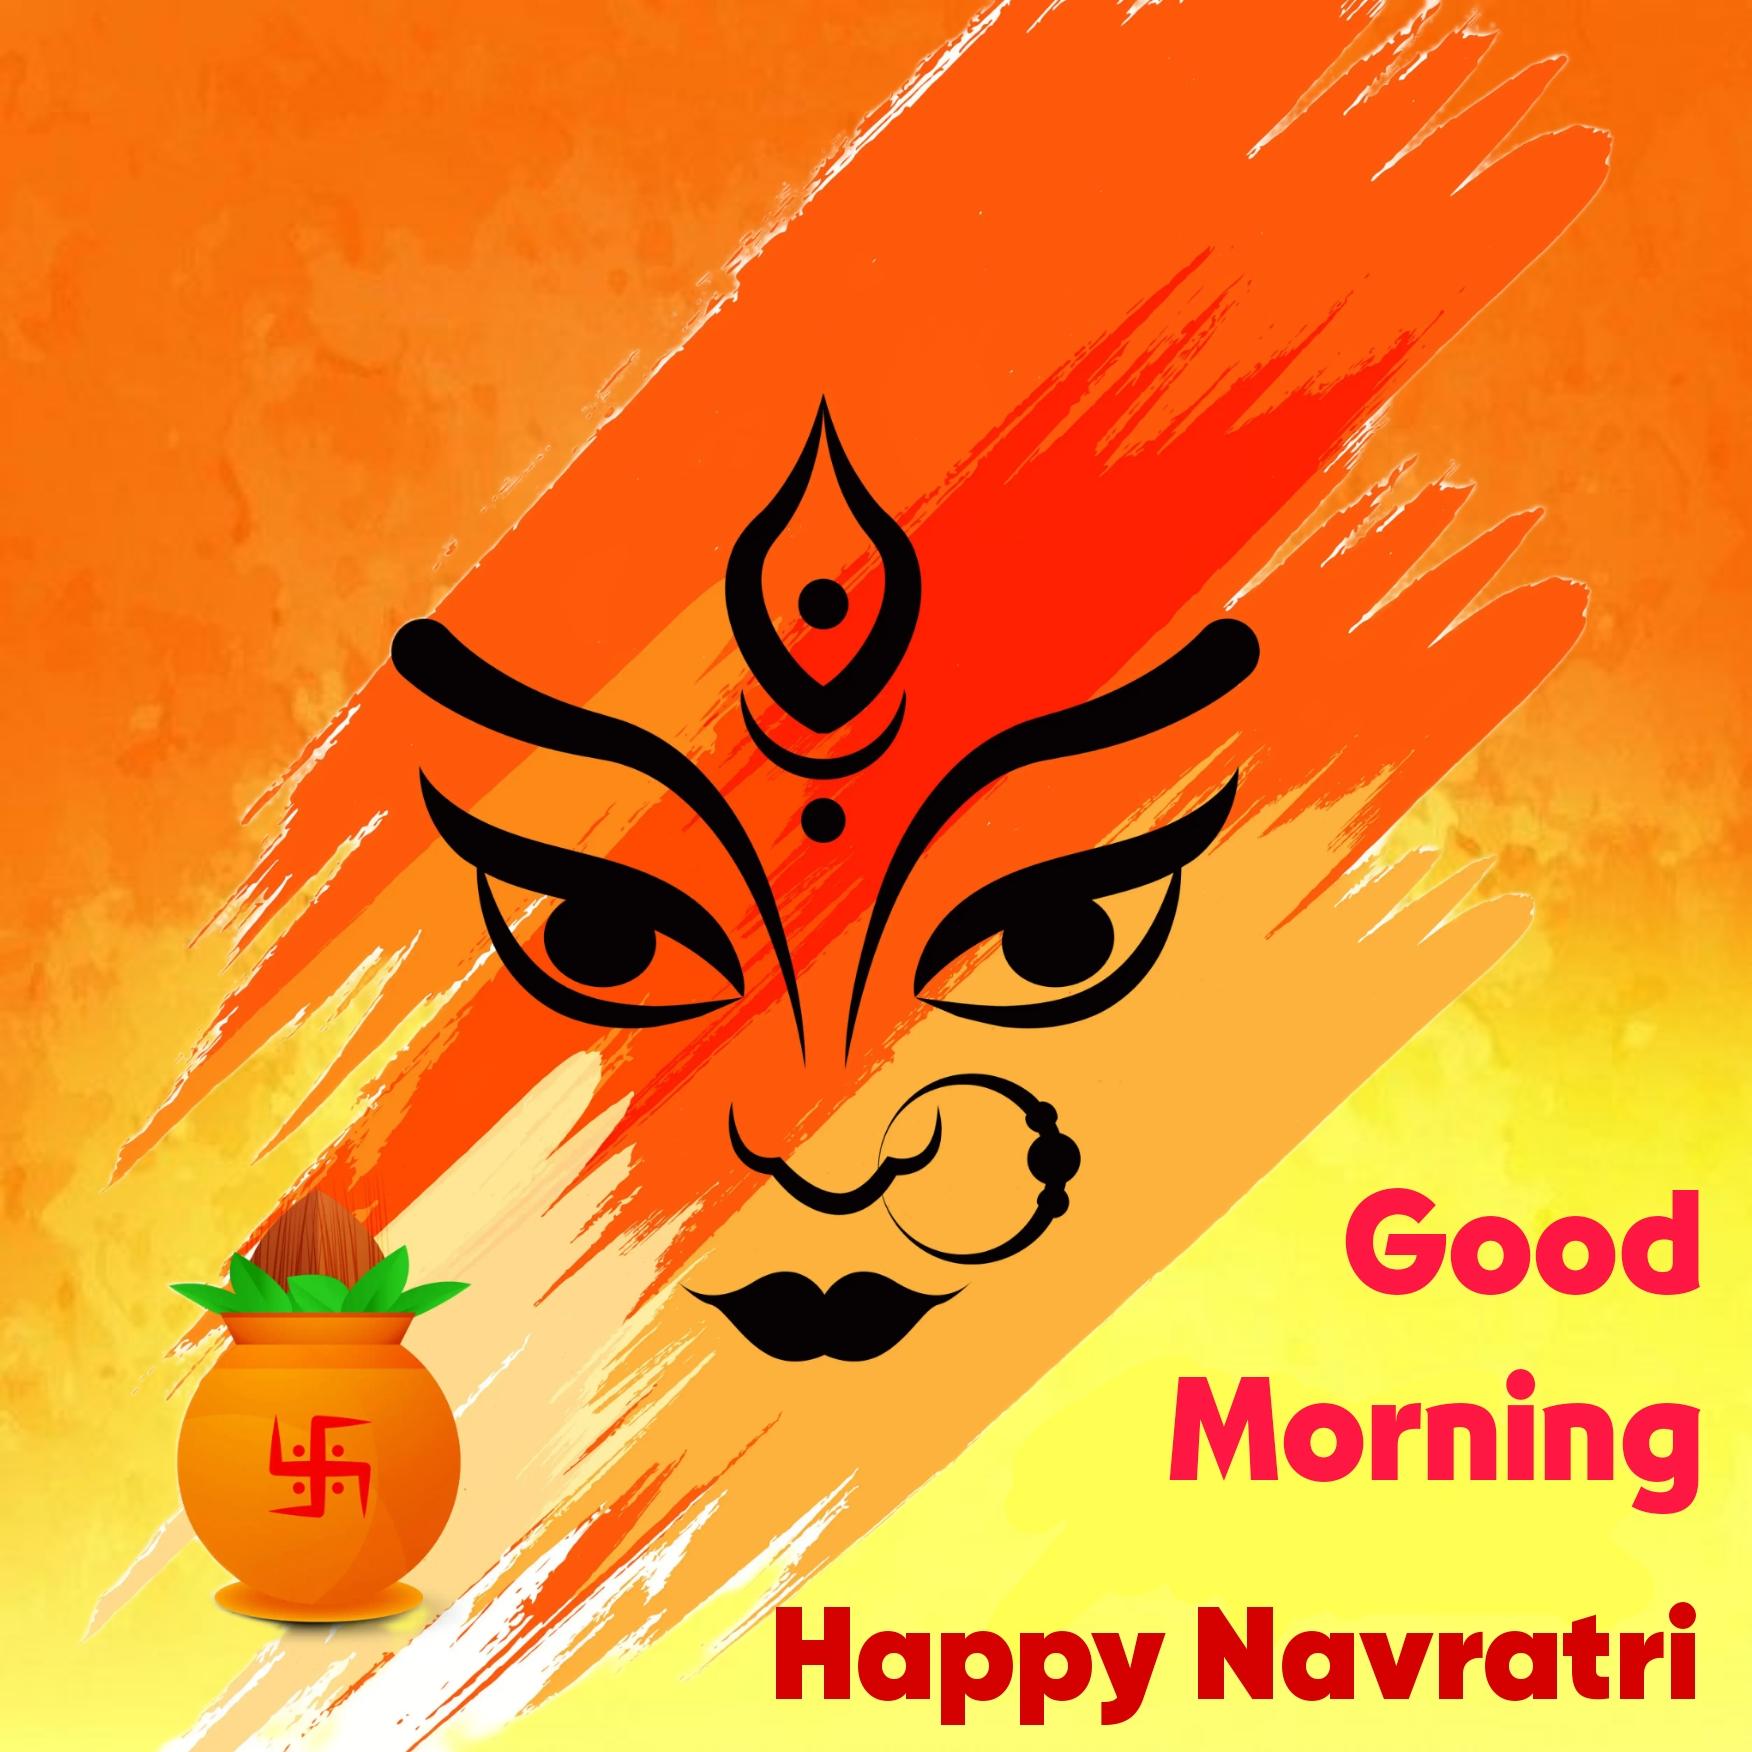 Good Morning Happy Navratri Images